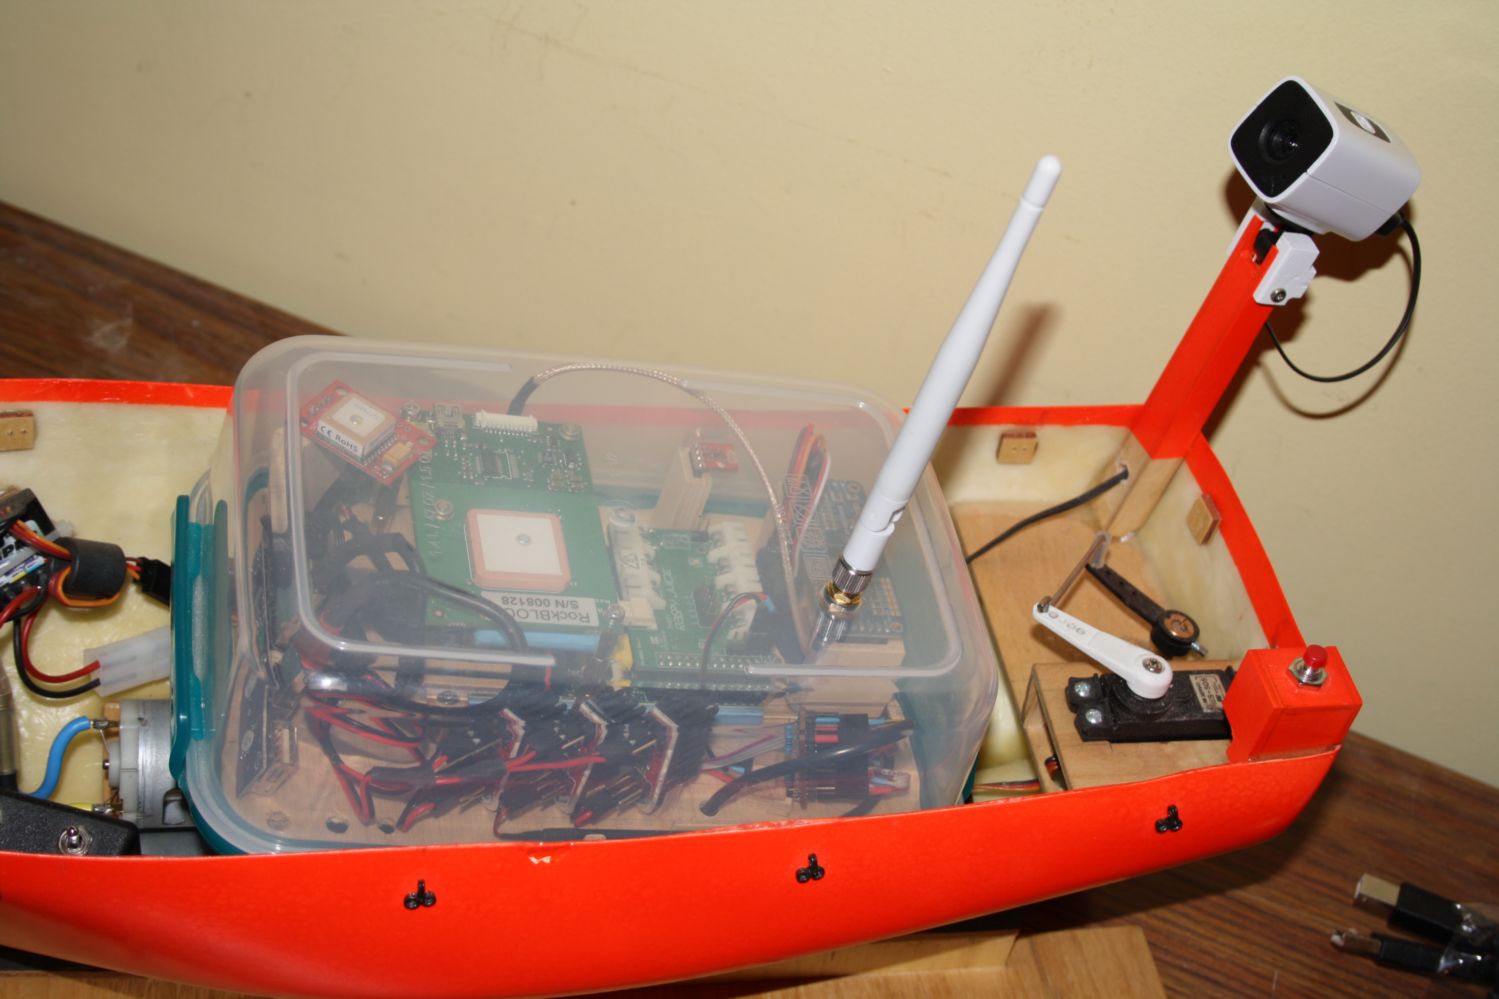 Making an Autonomous Boat Using a Raspberry Pi (WiP)